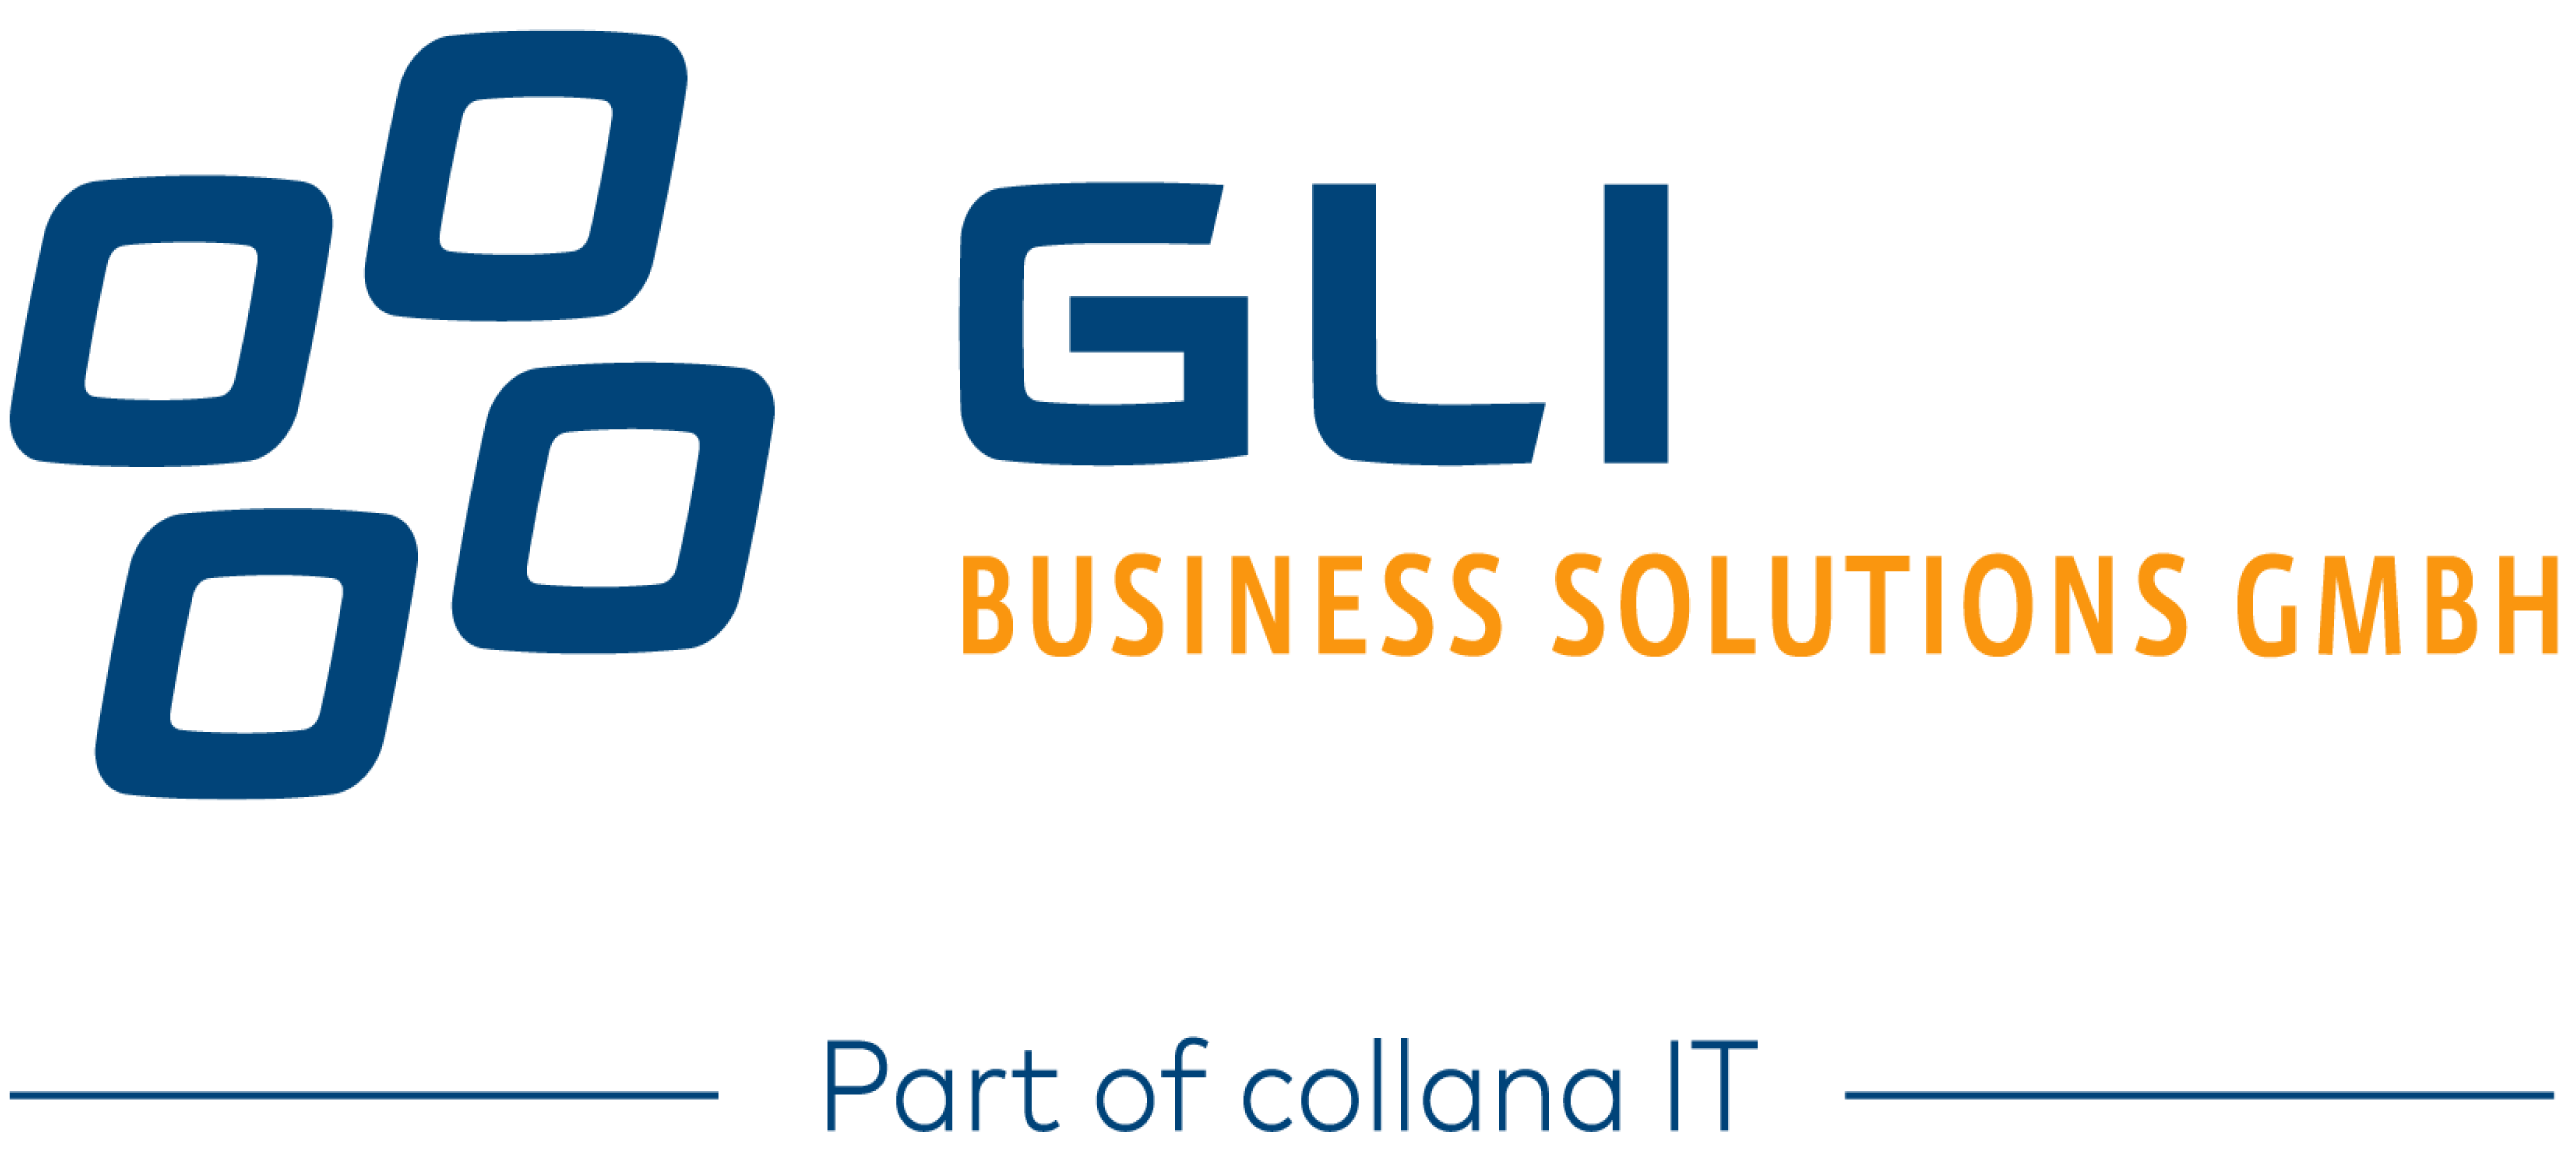 GLI Partner logo